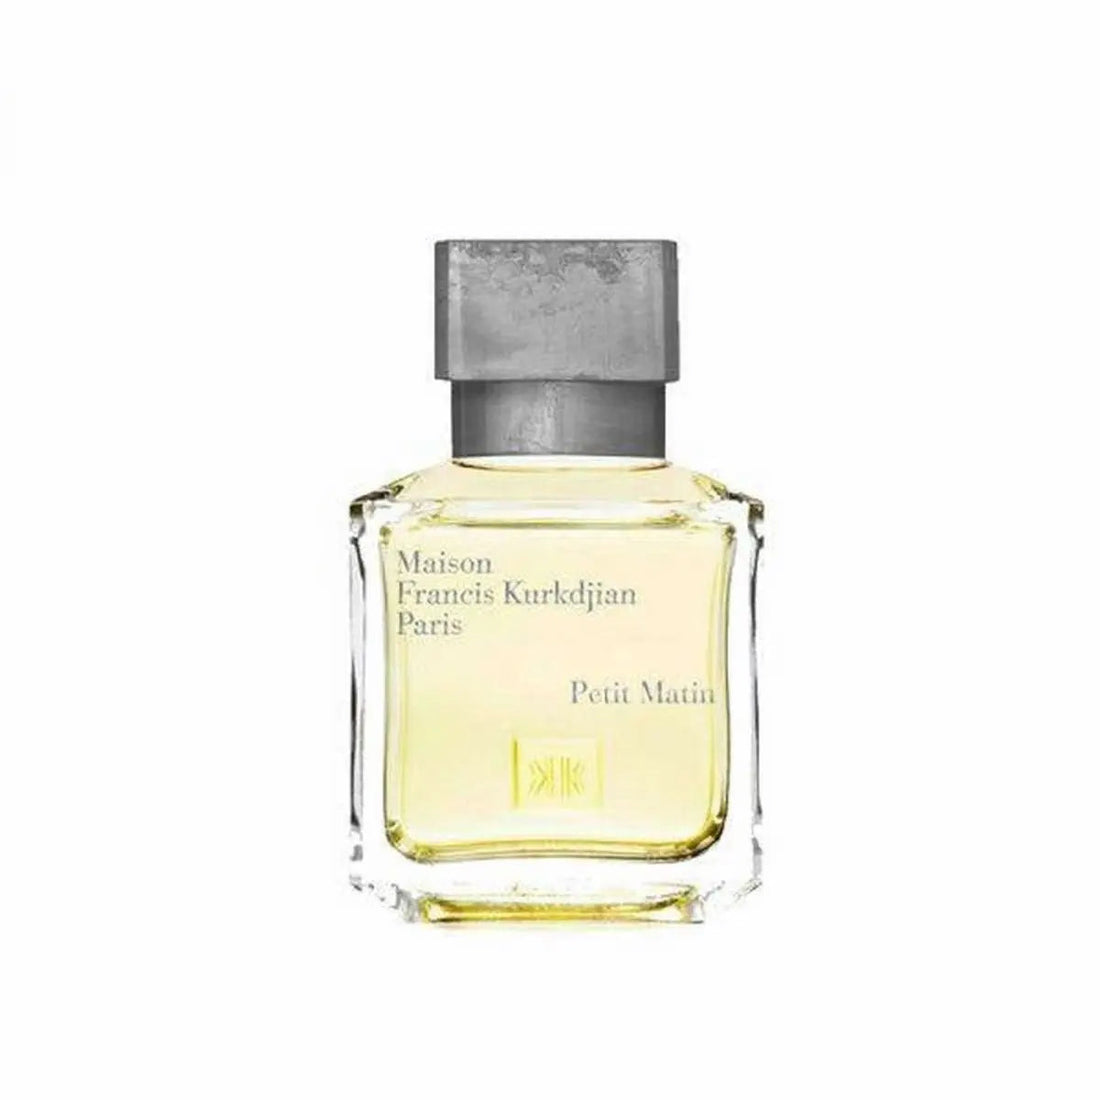 Maison francis kurkdjian Франсис Куркджян Petit Matin Eau de Parfum - 200 мл